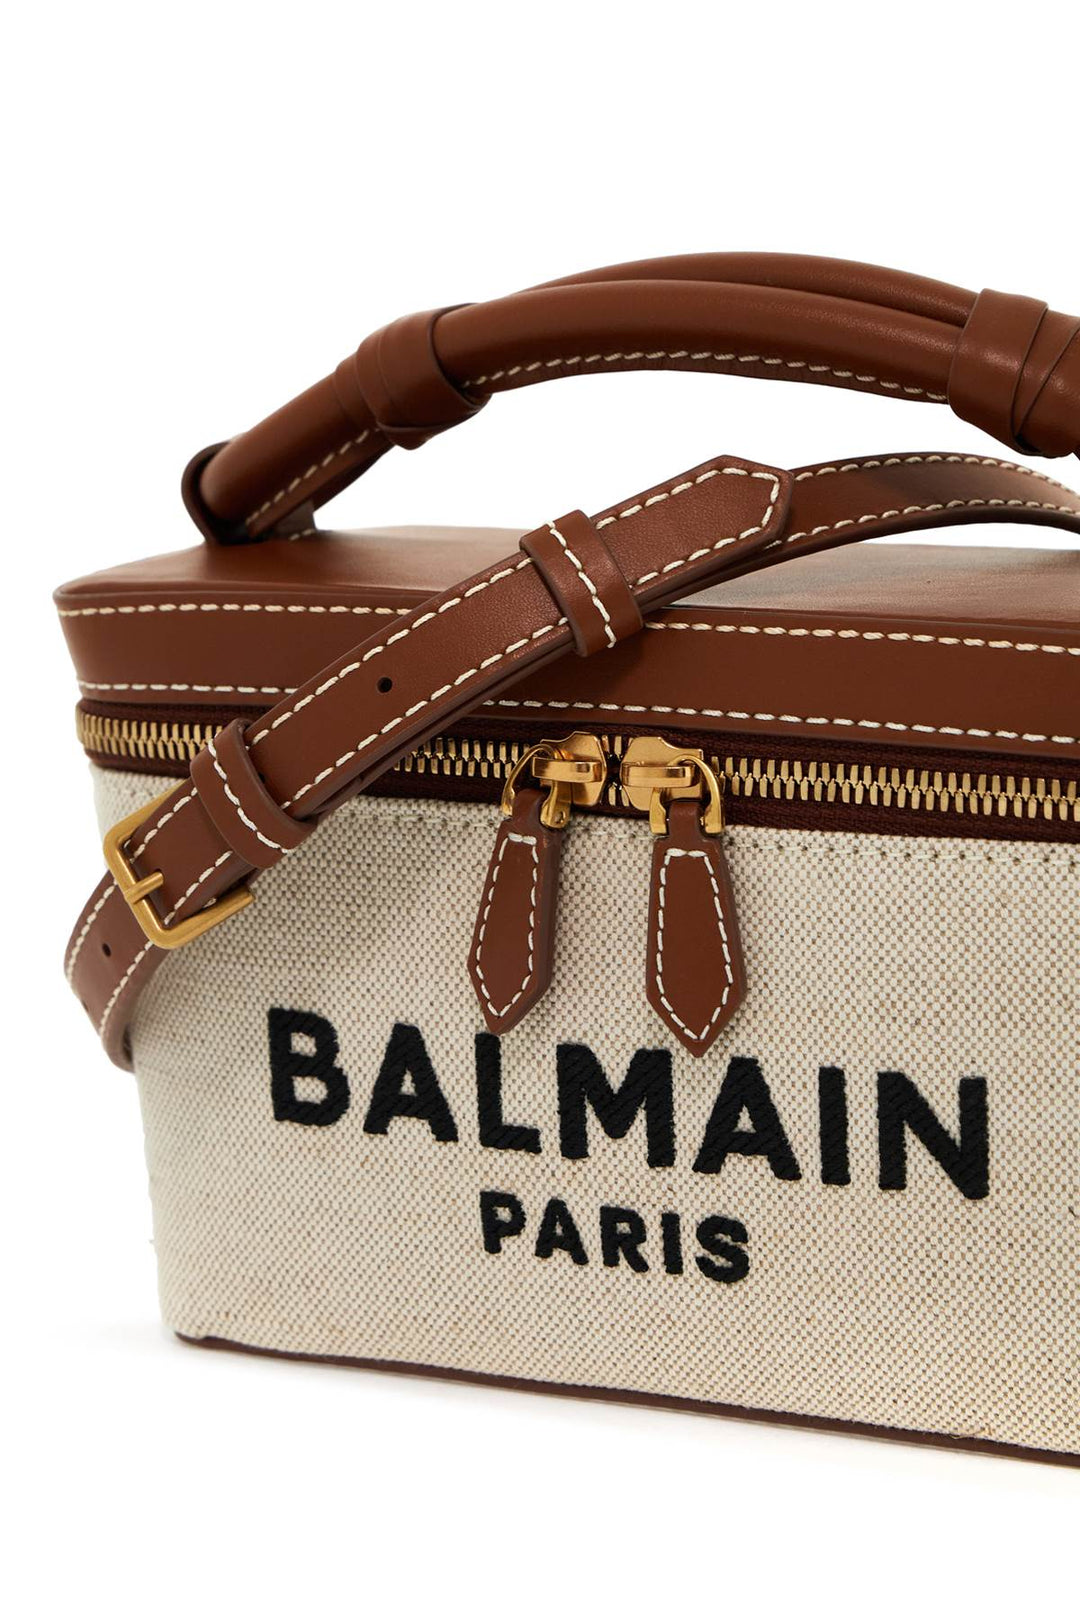 Balmain Handbag B Army   Brown